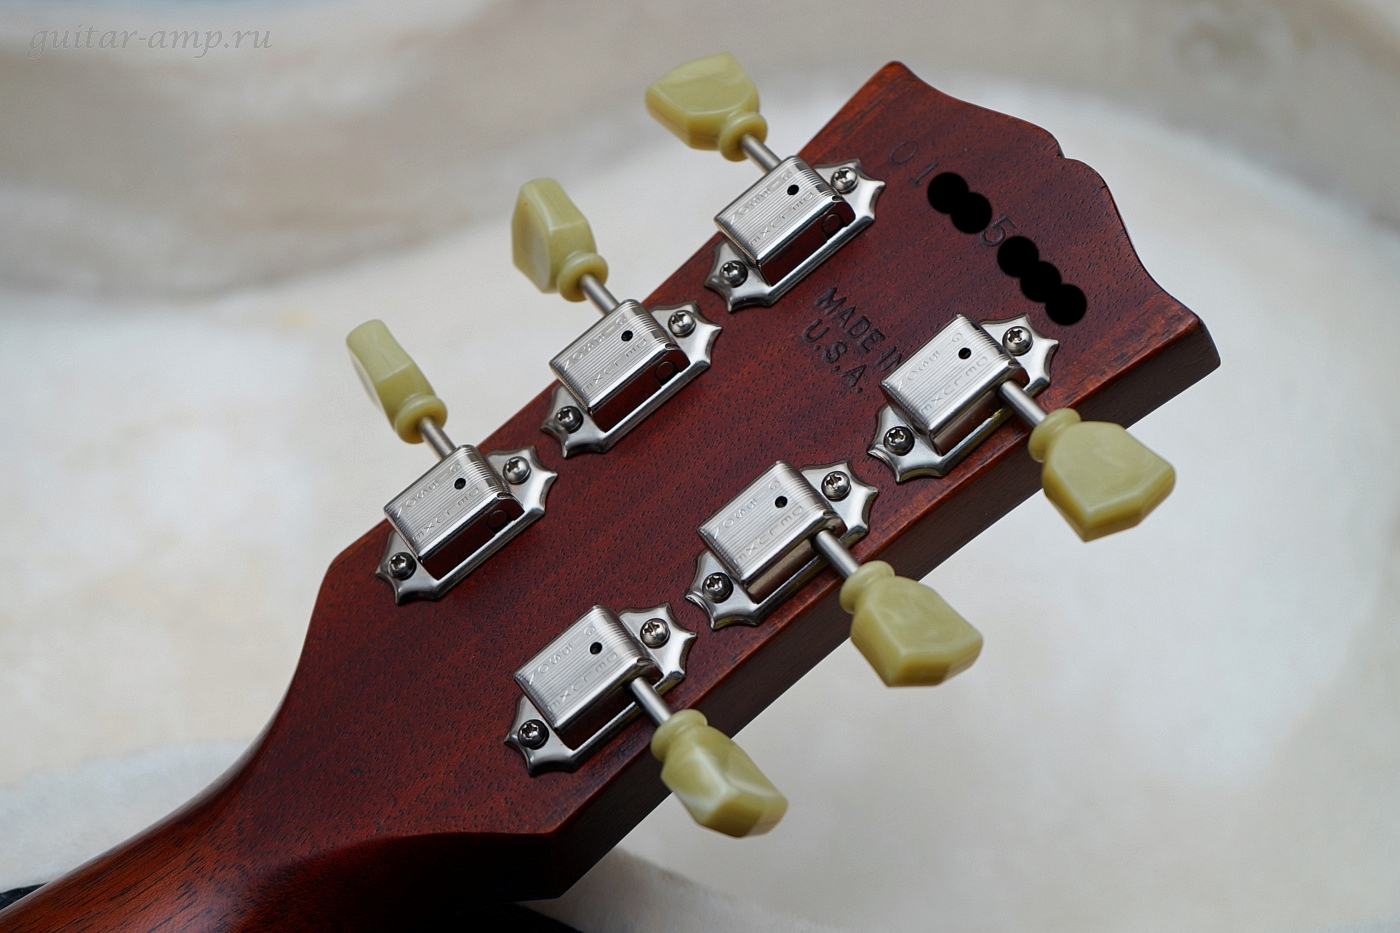 Gibson Les Paul Standard Premium Plus Faded Vintage Burst Super Rare 2005